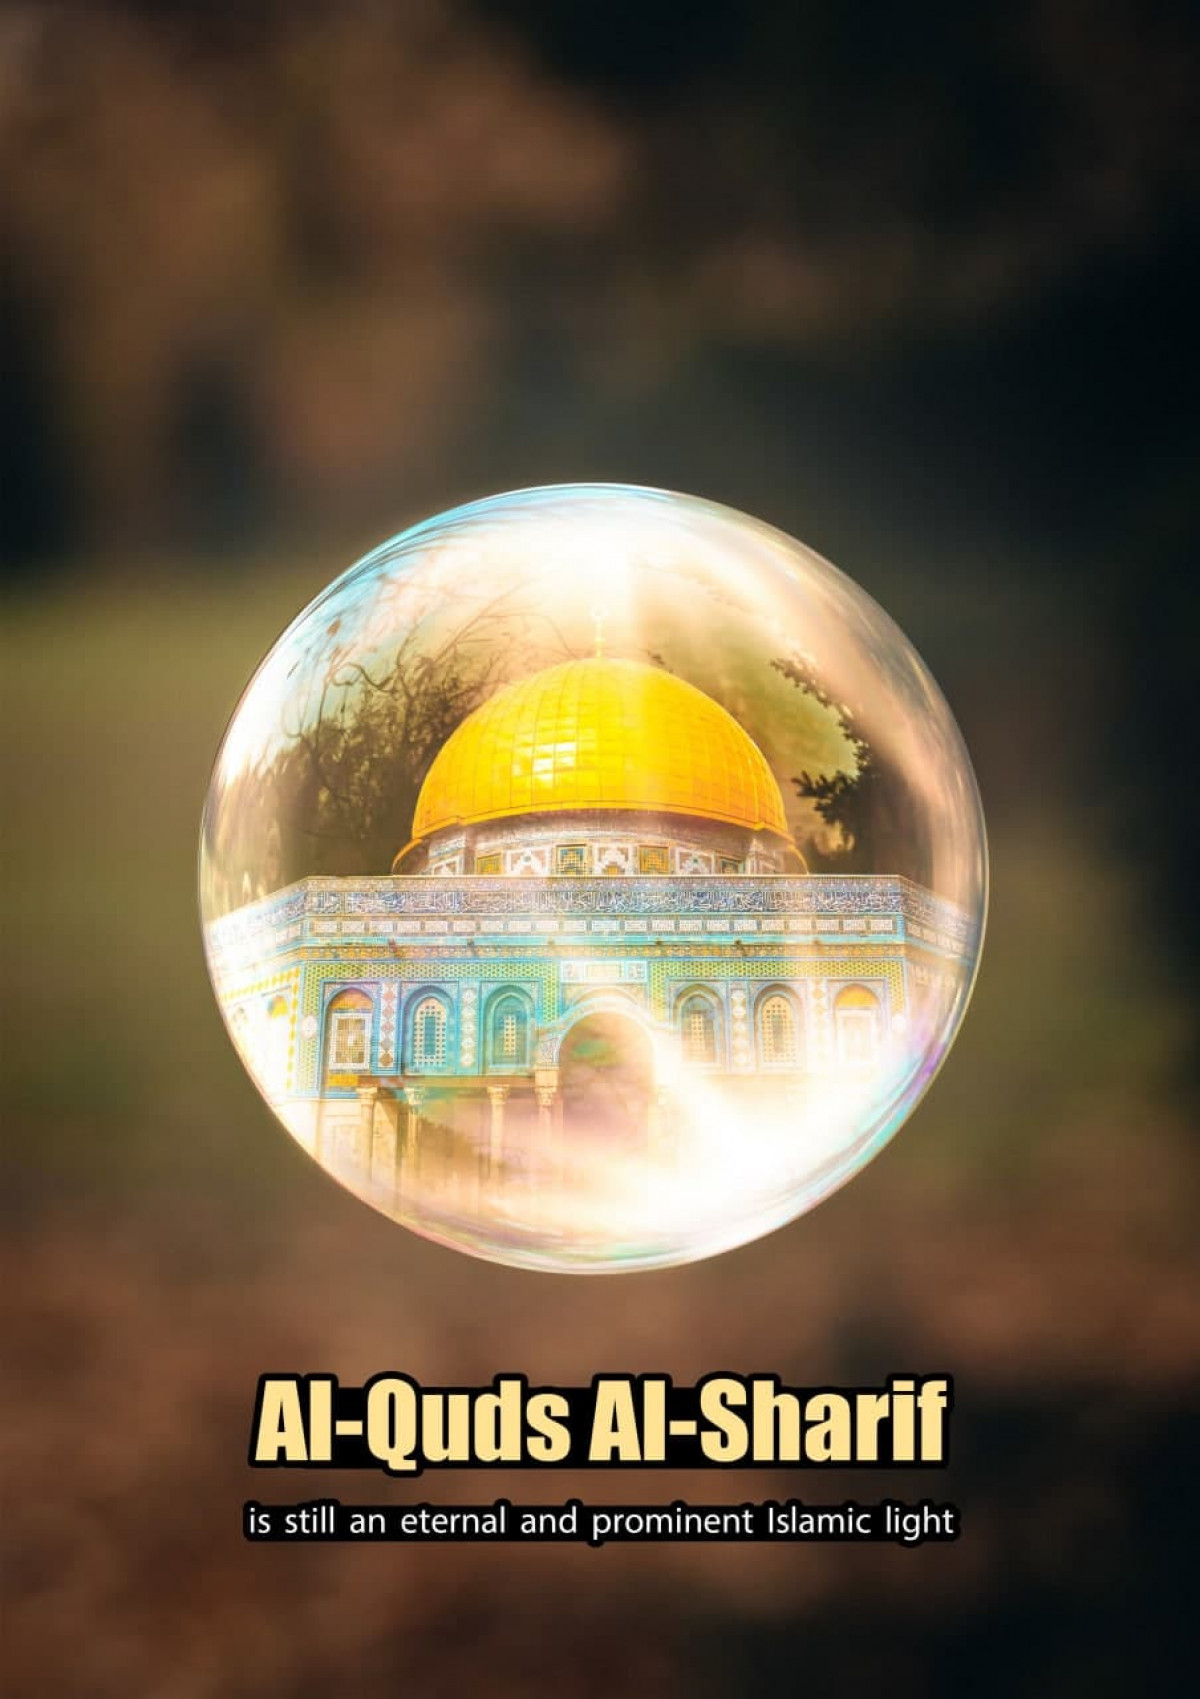 Al-Quds Al-Sharif is still an eternal and prominent Islamic light